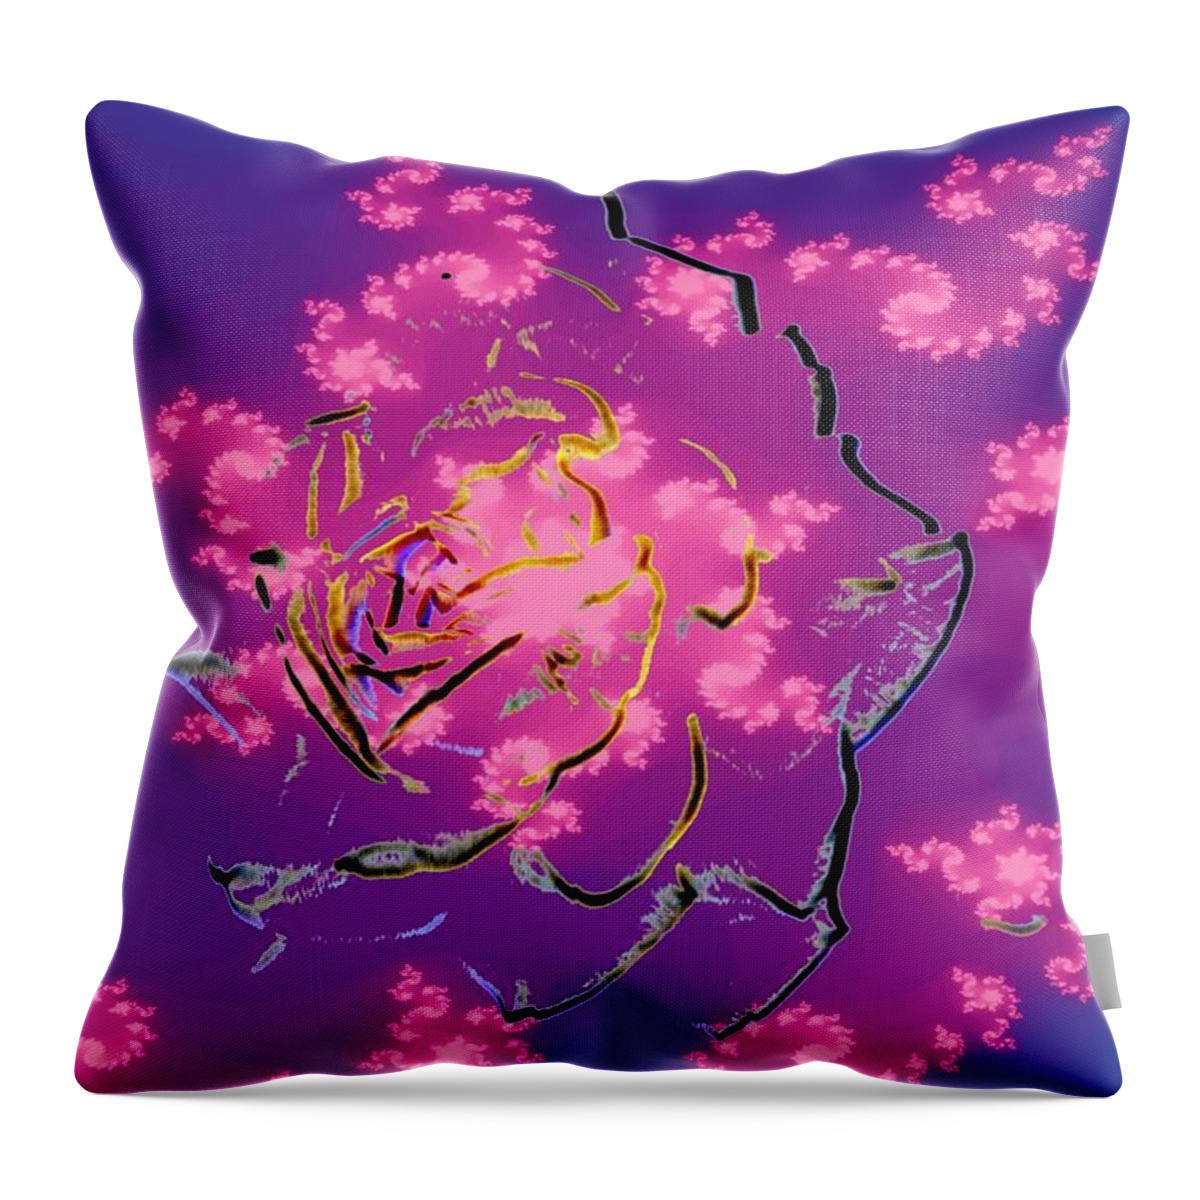 Rose Throw Pillow featuring the digital art Rose by Tim Allen